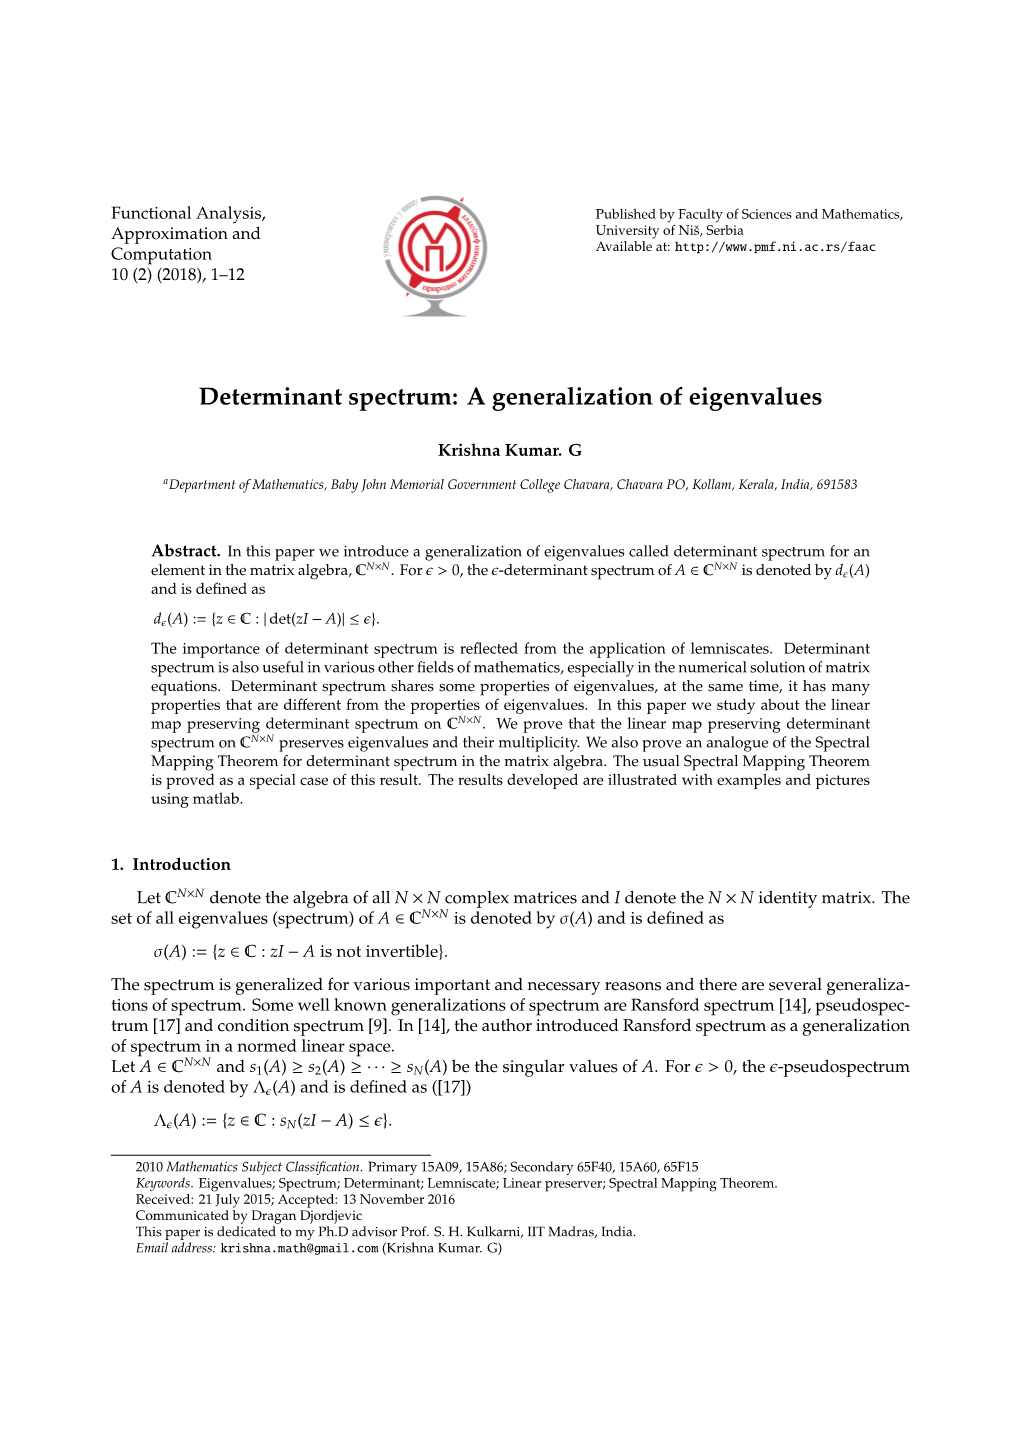 Determinant Spectrum: a Generalization of Eigenvalues